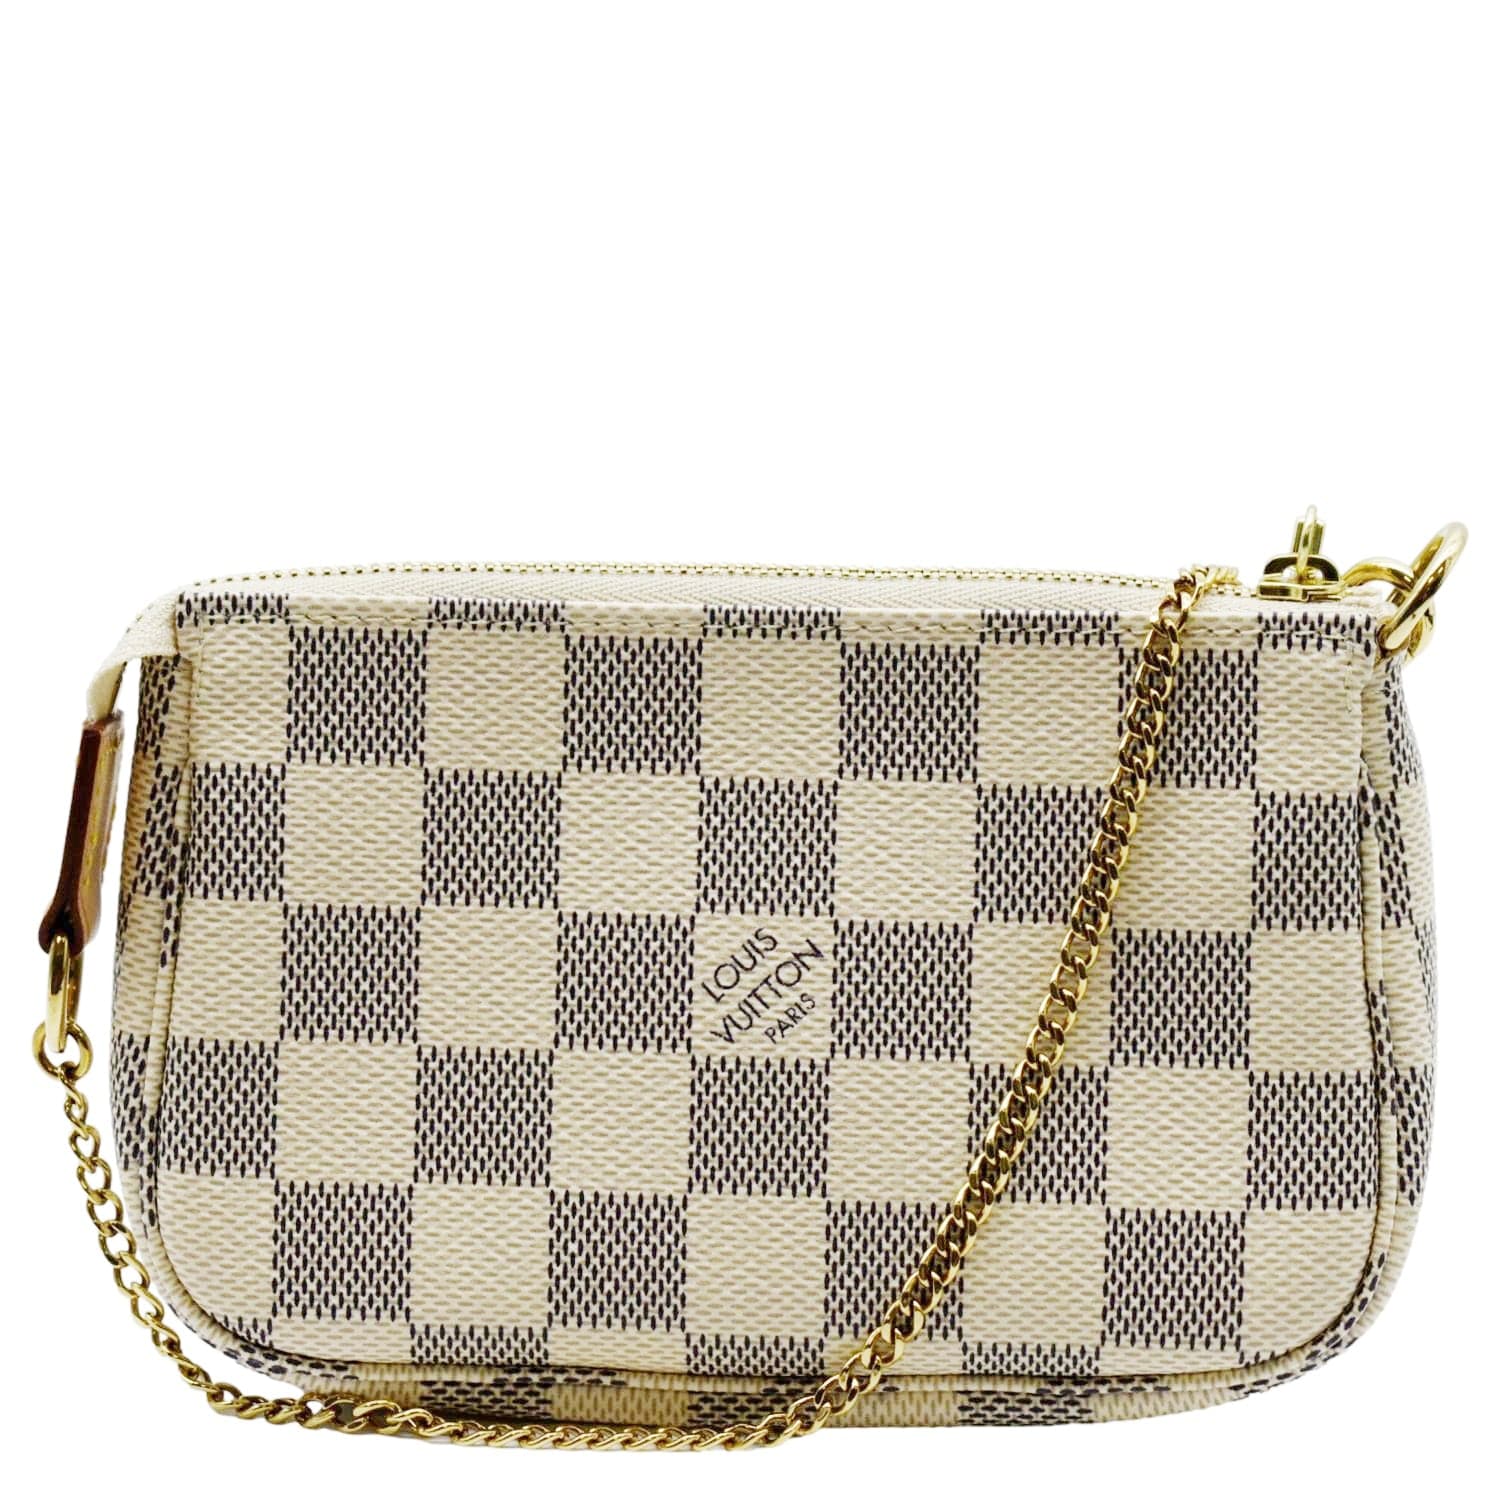 EUC Authentic Louis Vuitton Hand Bag small petit bucket brown purse tote LV  | eBay